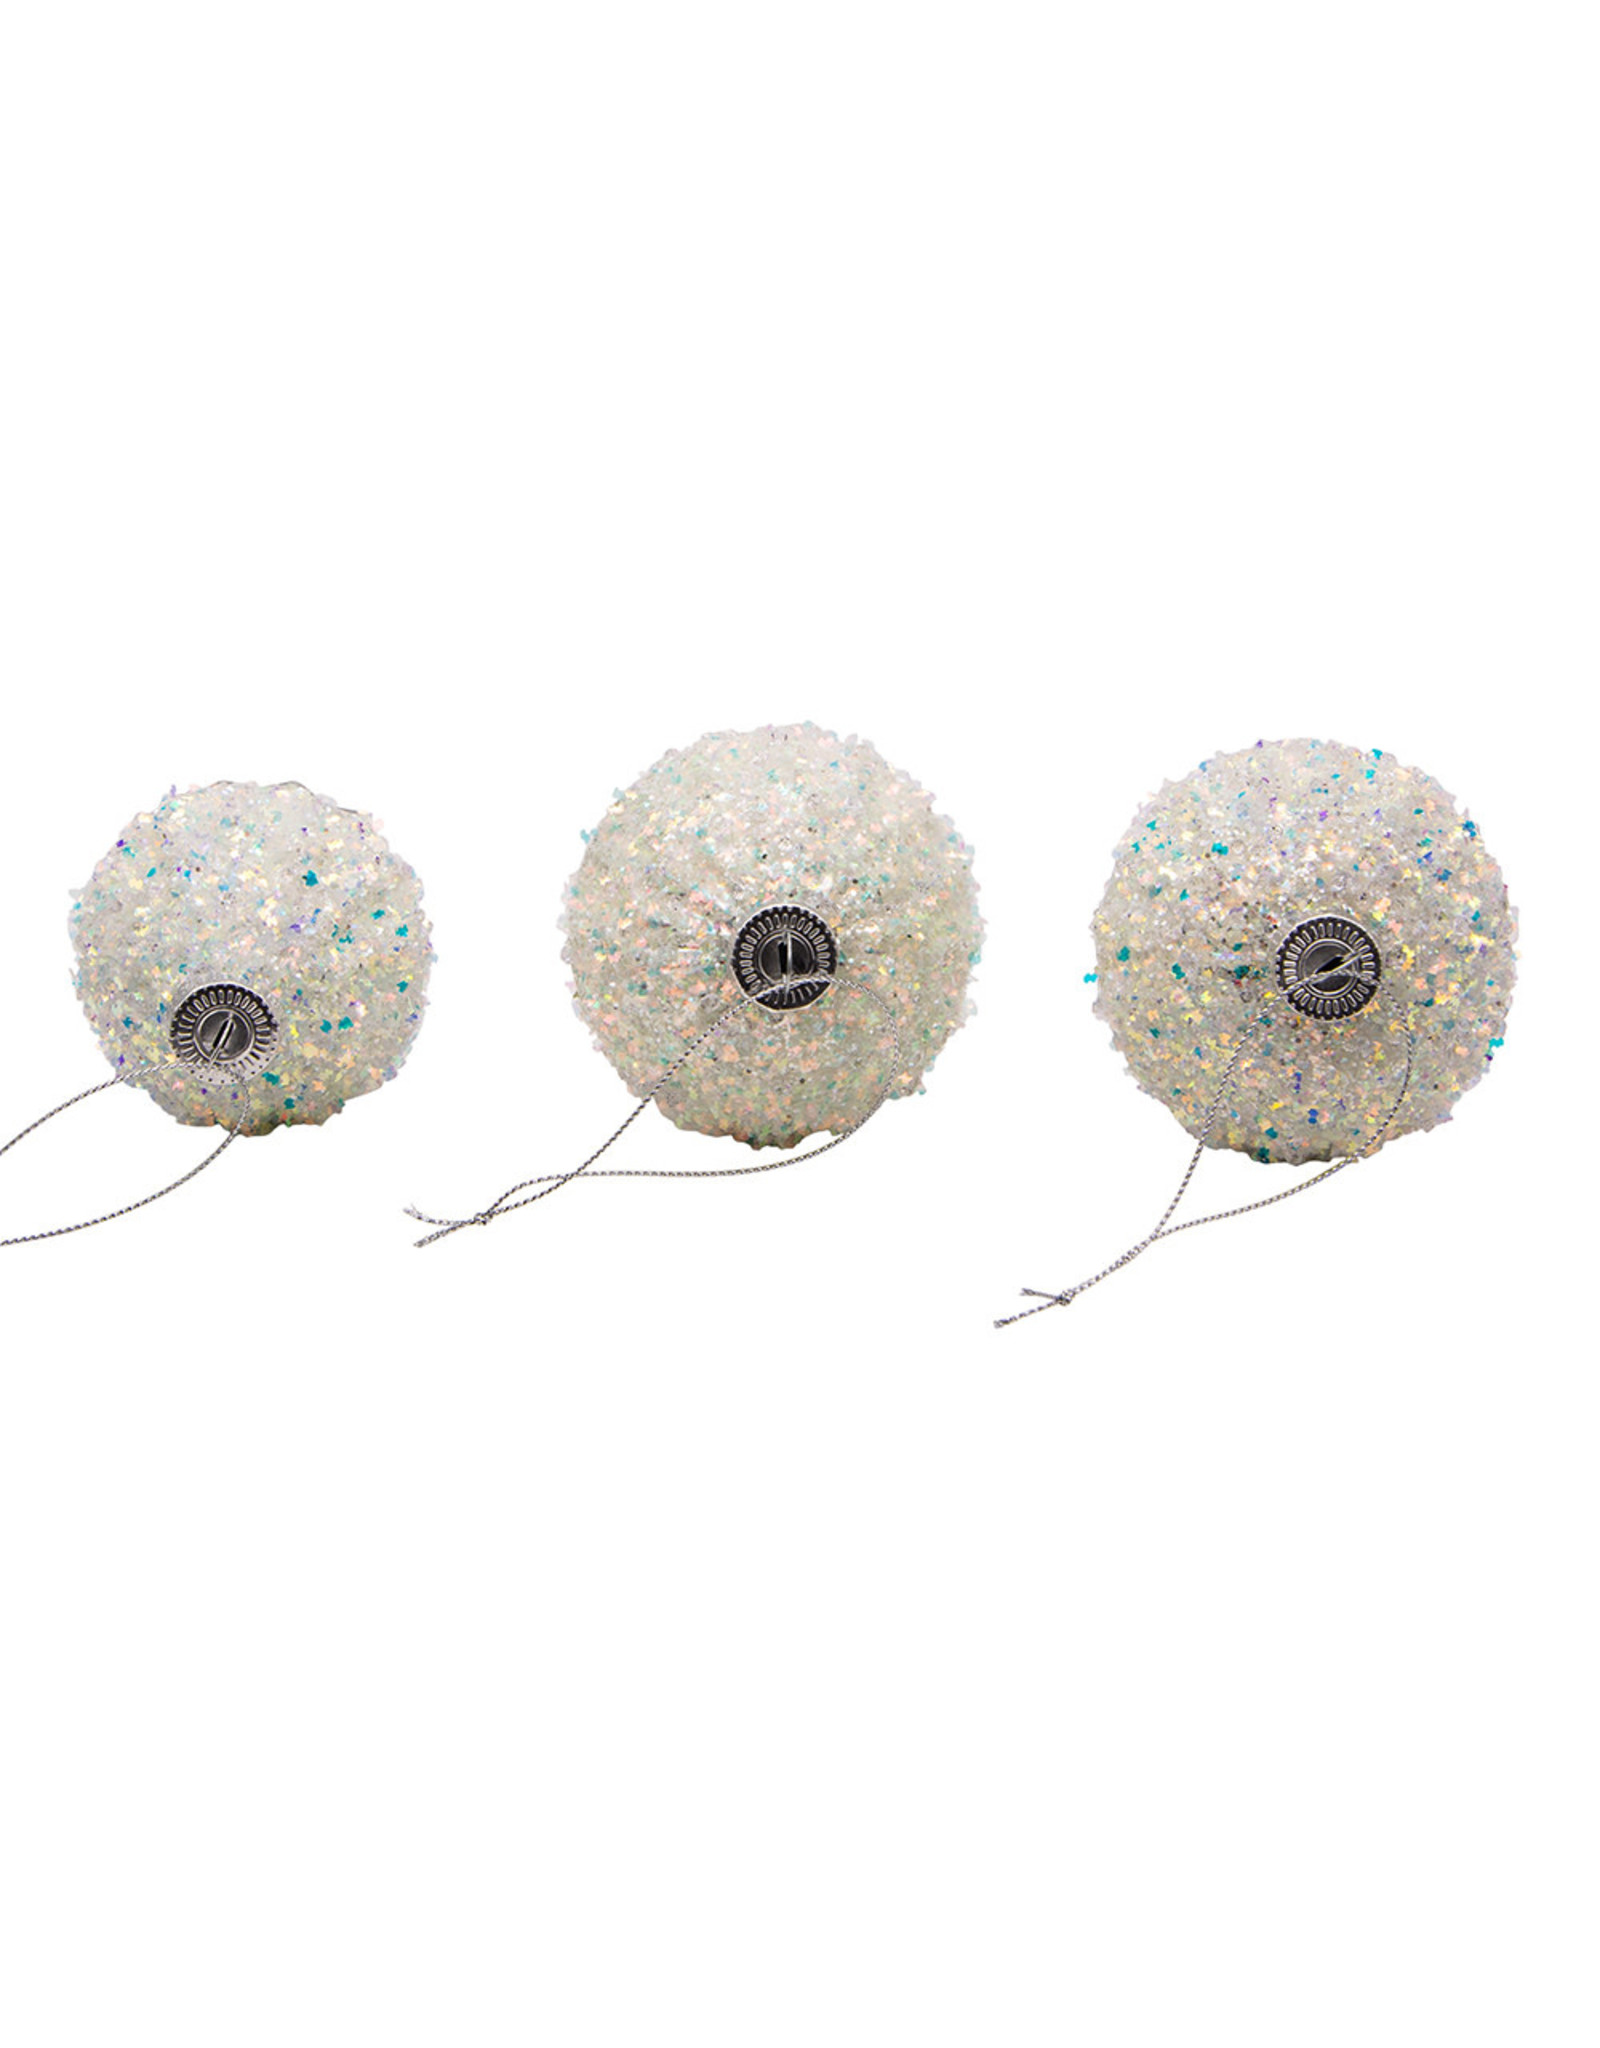 Kurt Adler 80MM Silver Glittered Sequined Glass Ornaments 3pc Set